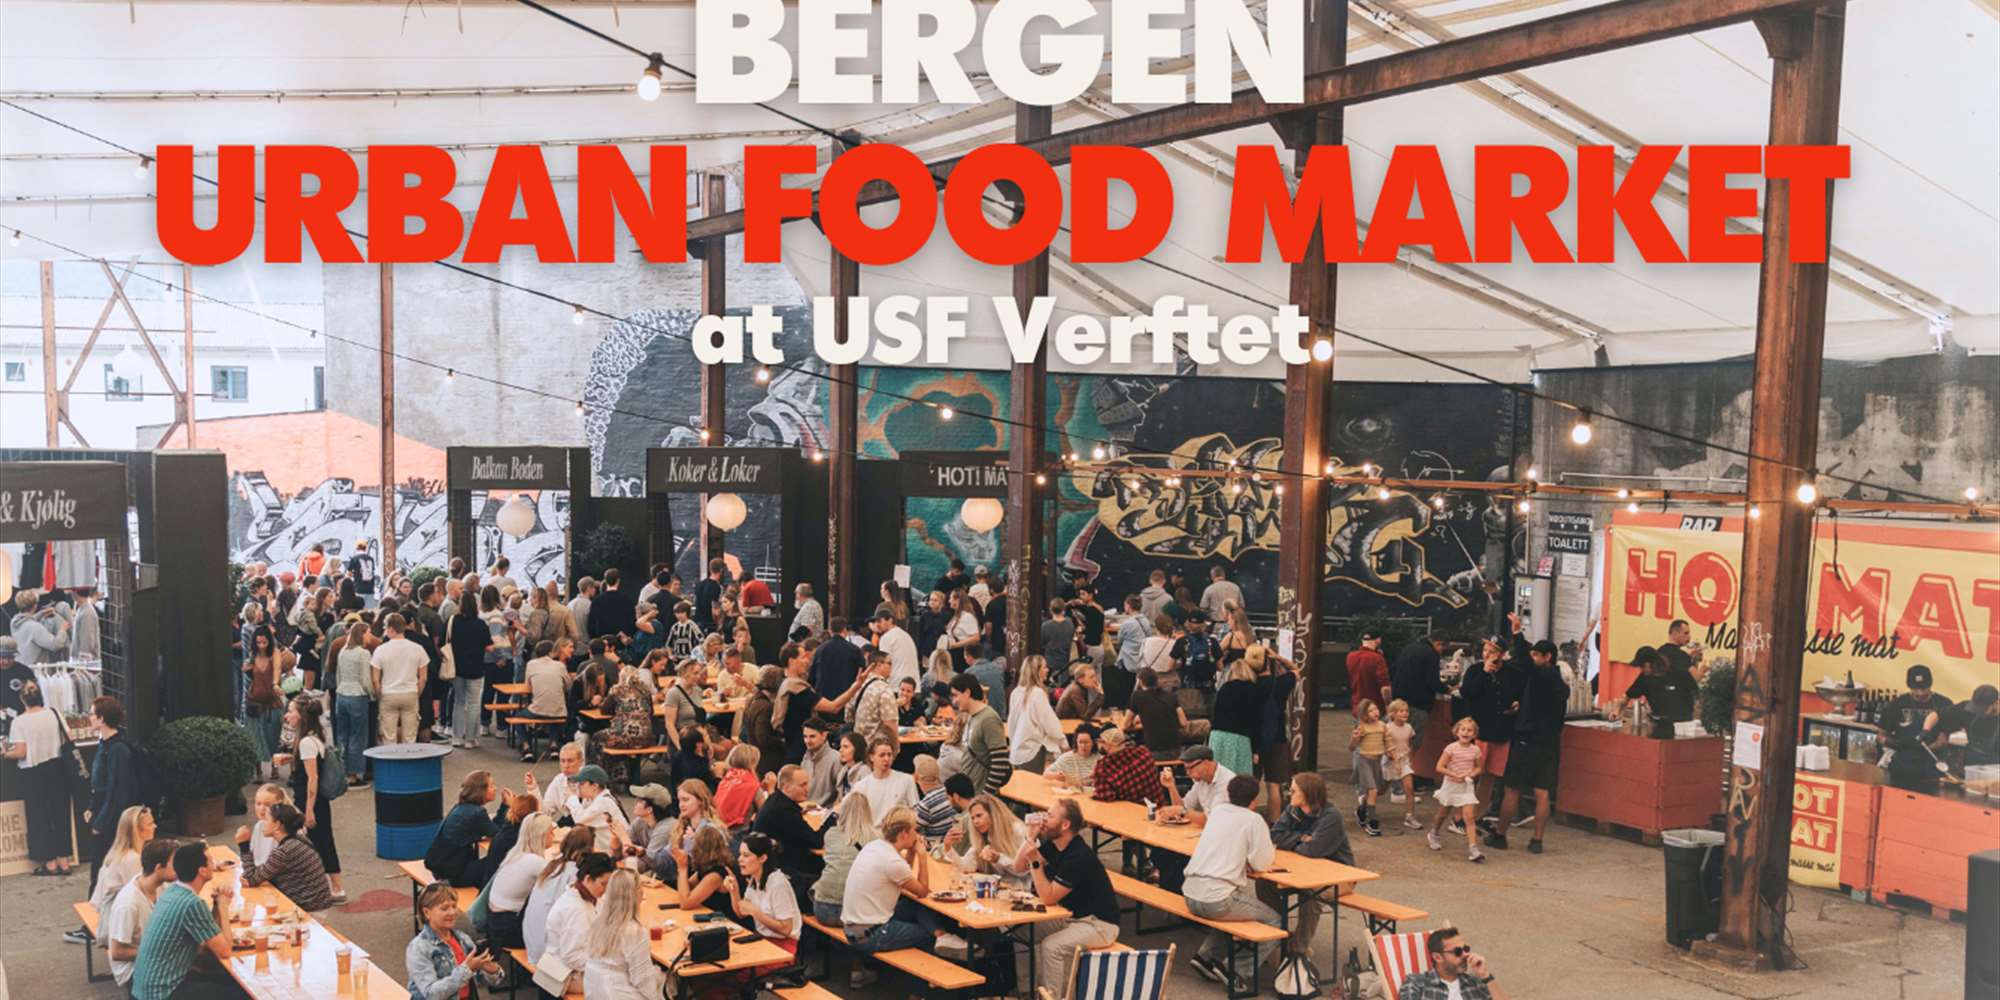 The urban food market at USF Verftet in Bergen